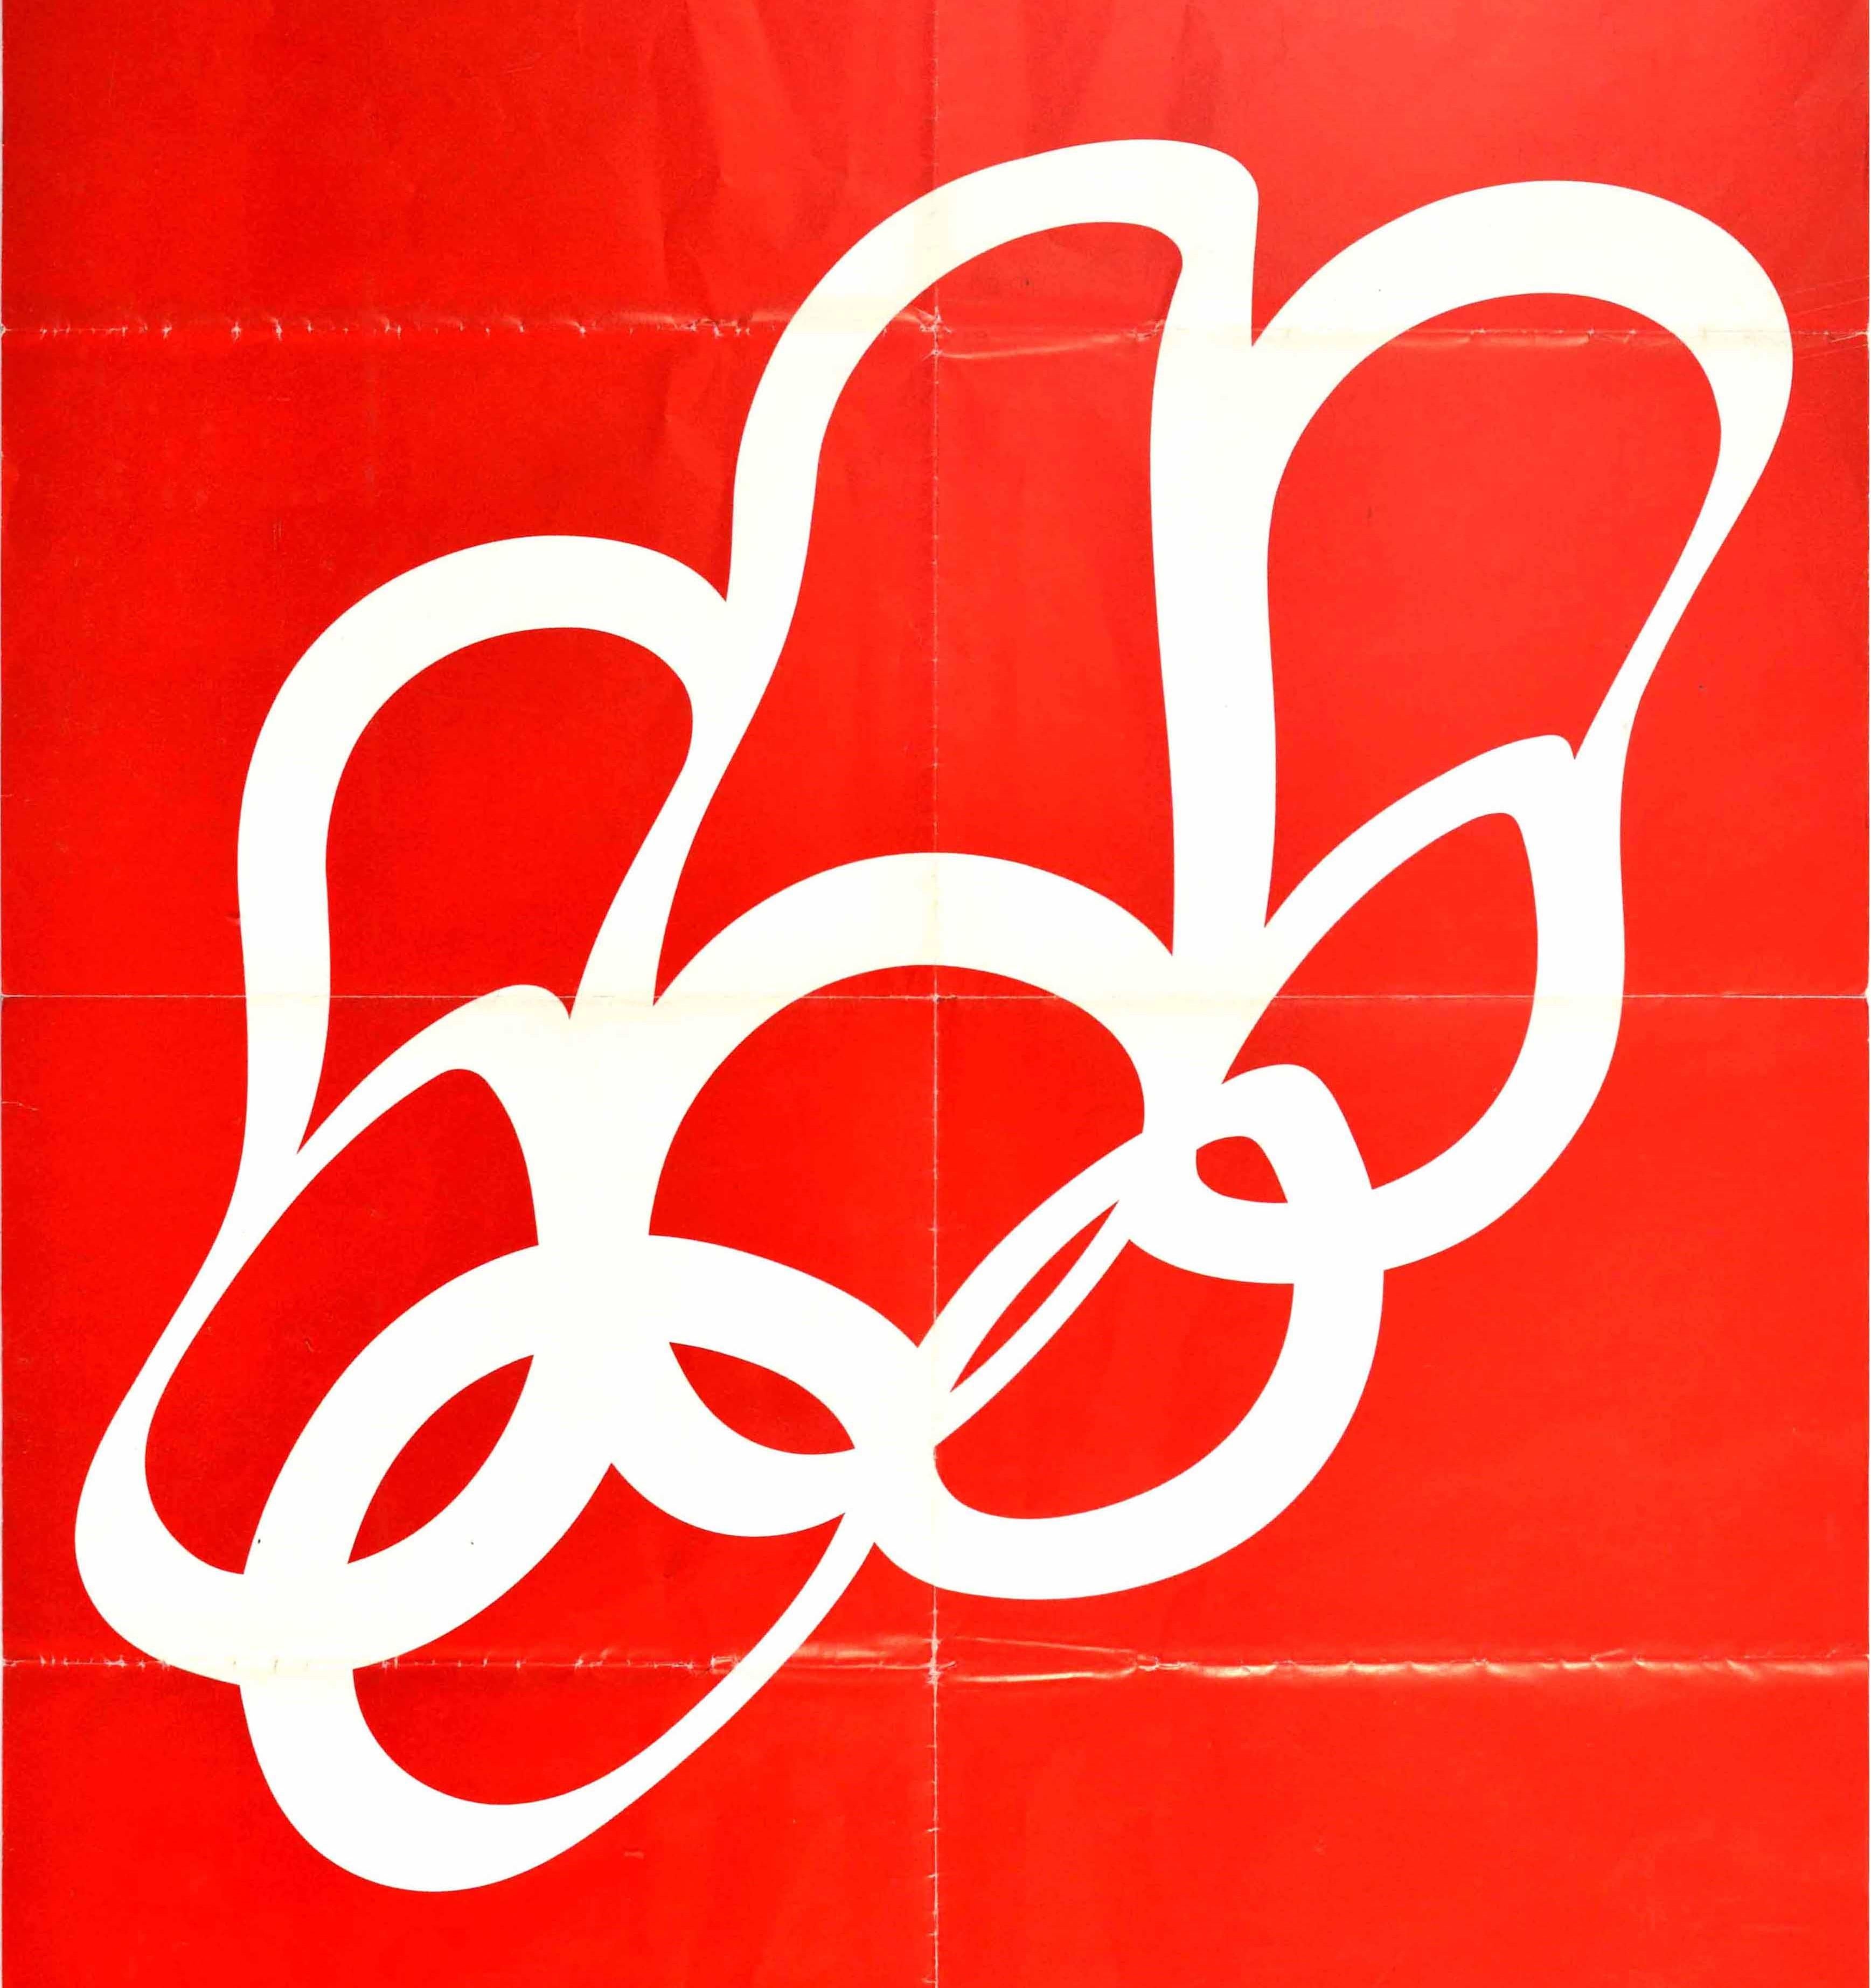 montreal 1976 logo